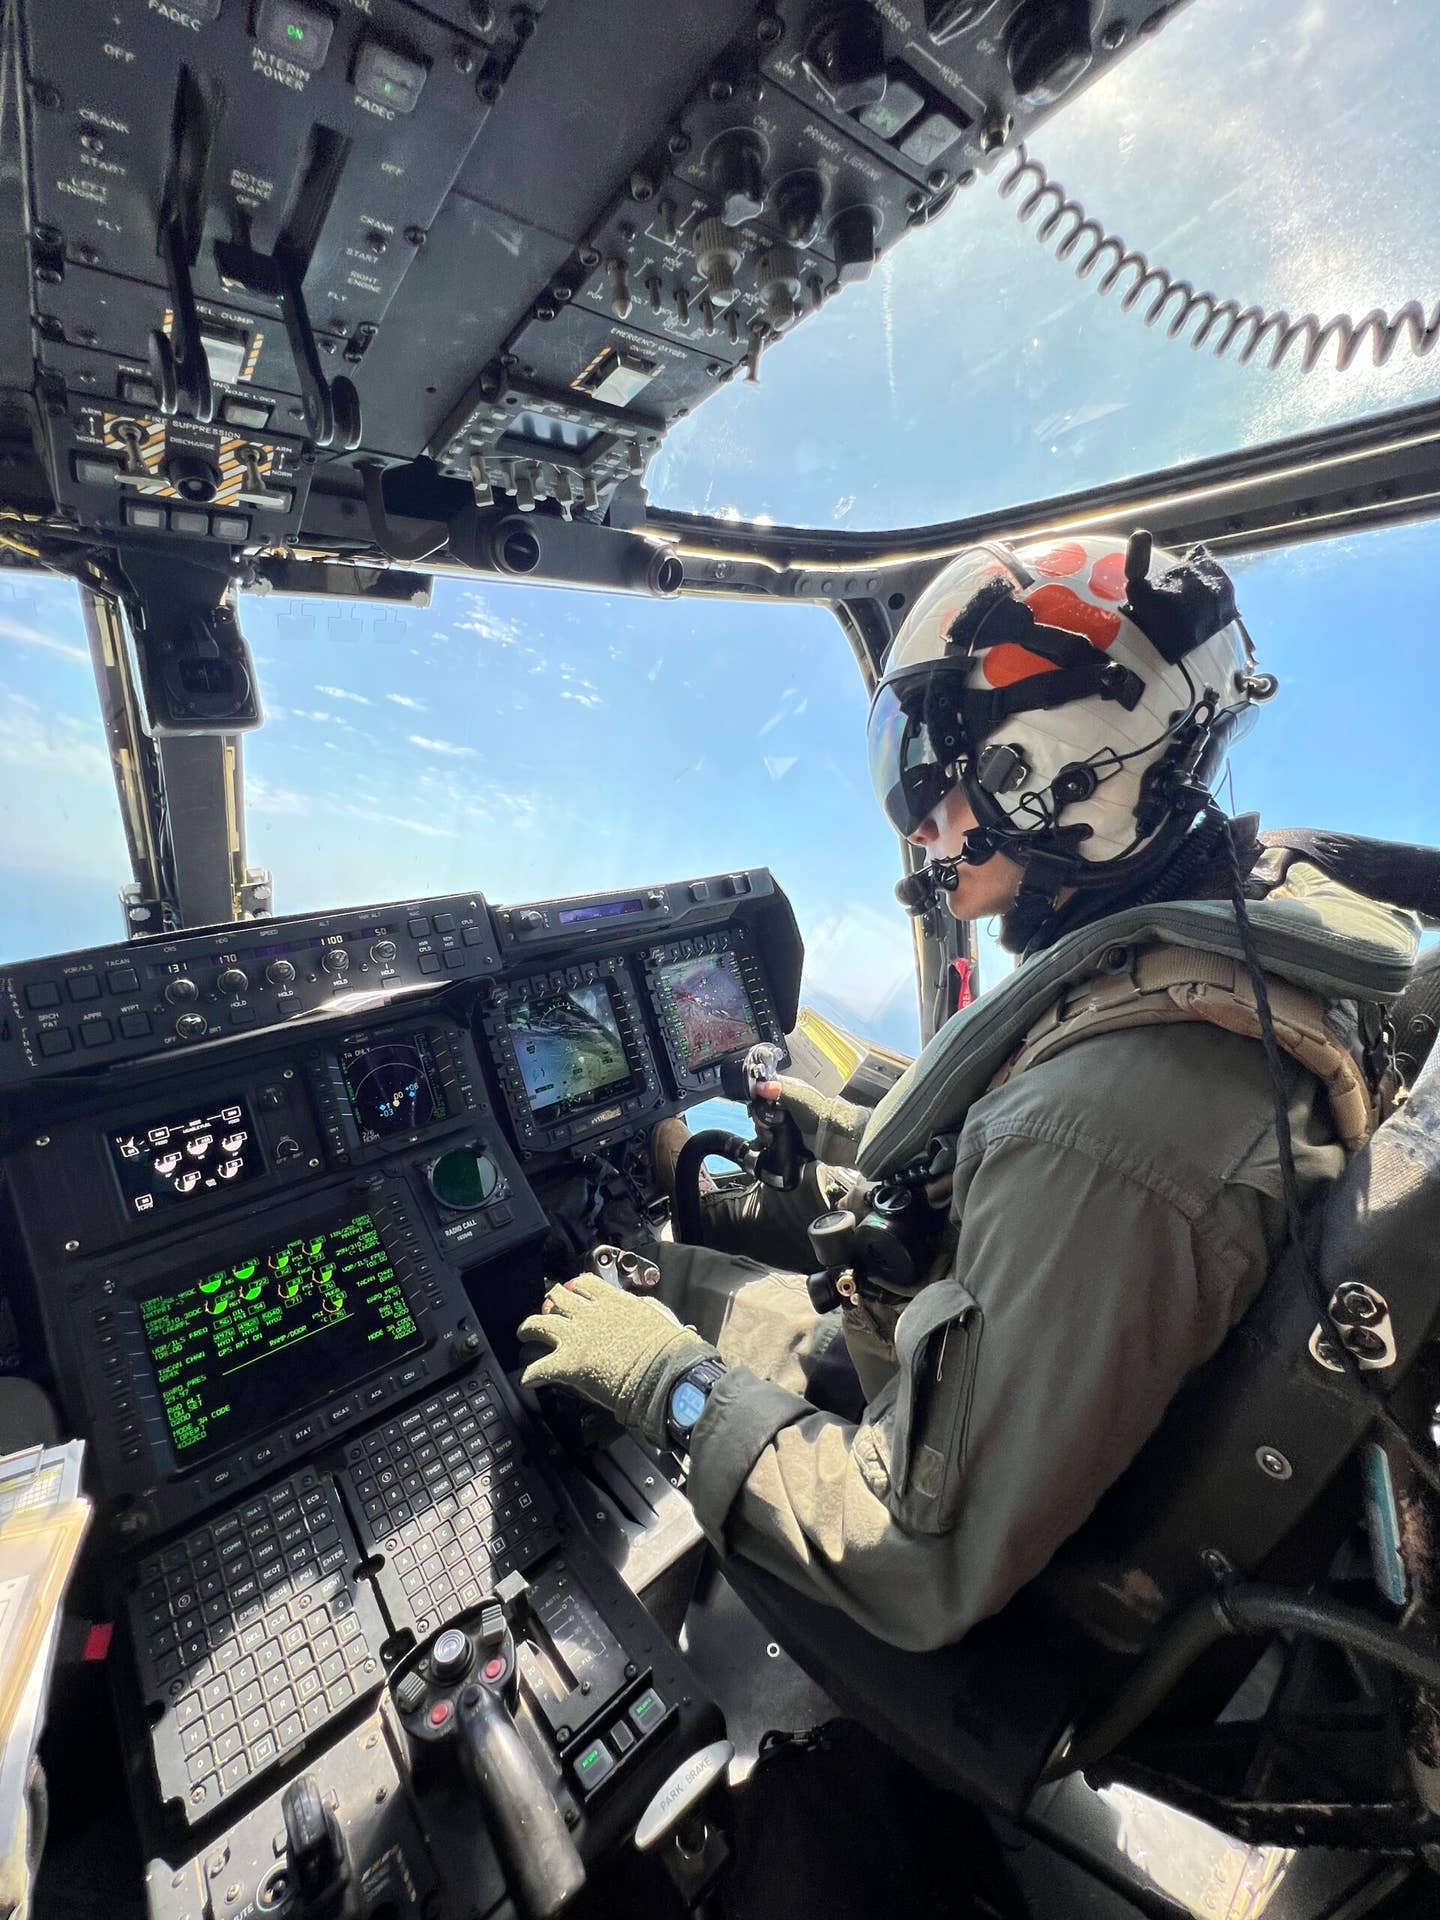 VMX-1 MV-22 Osprey pilot. (Author's image)